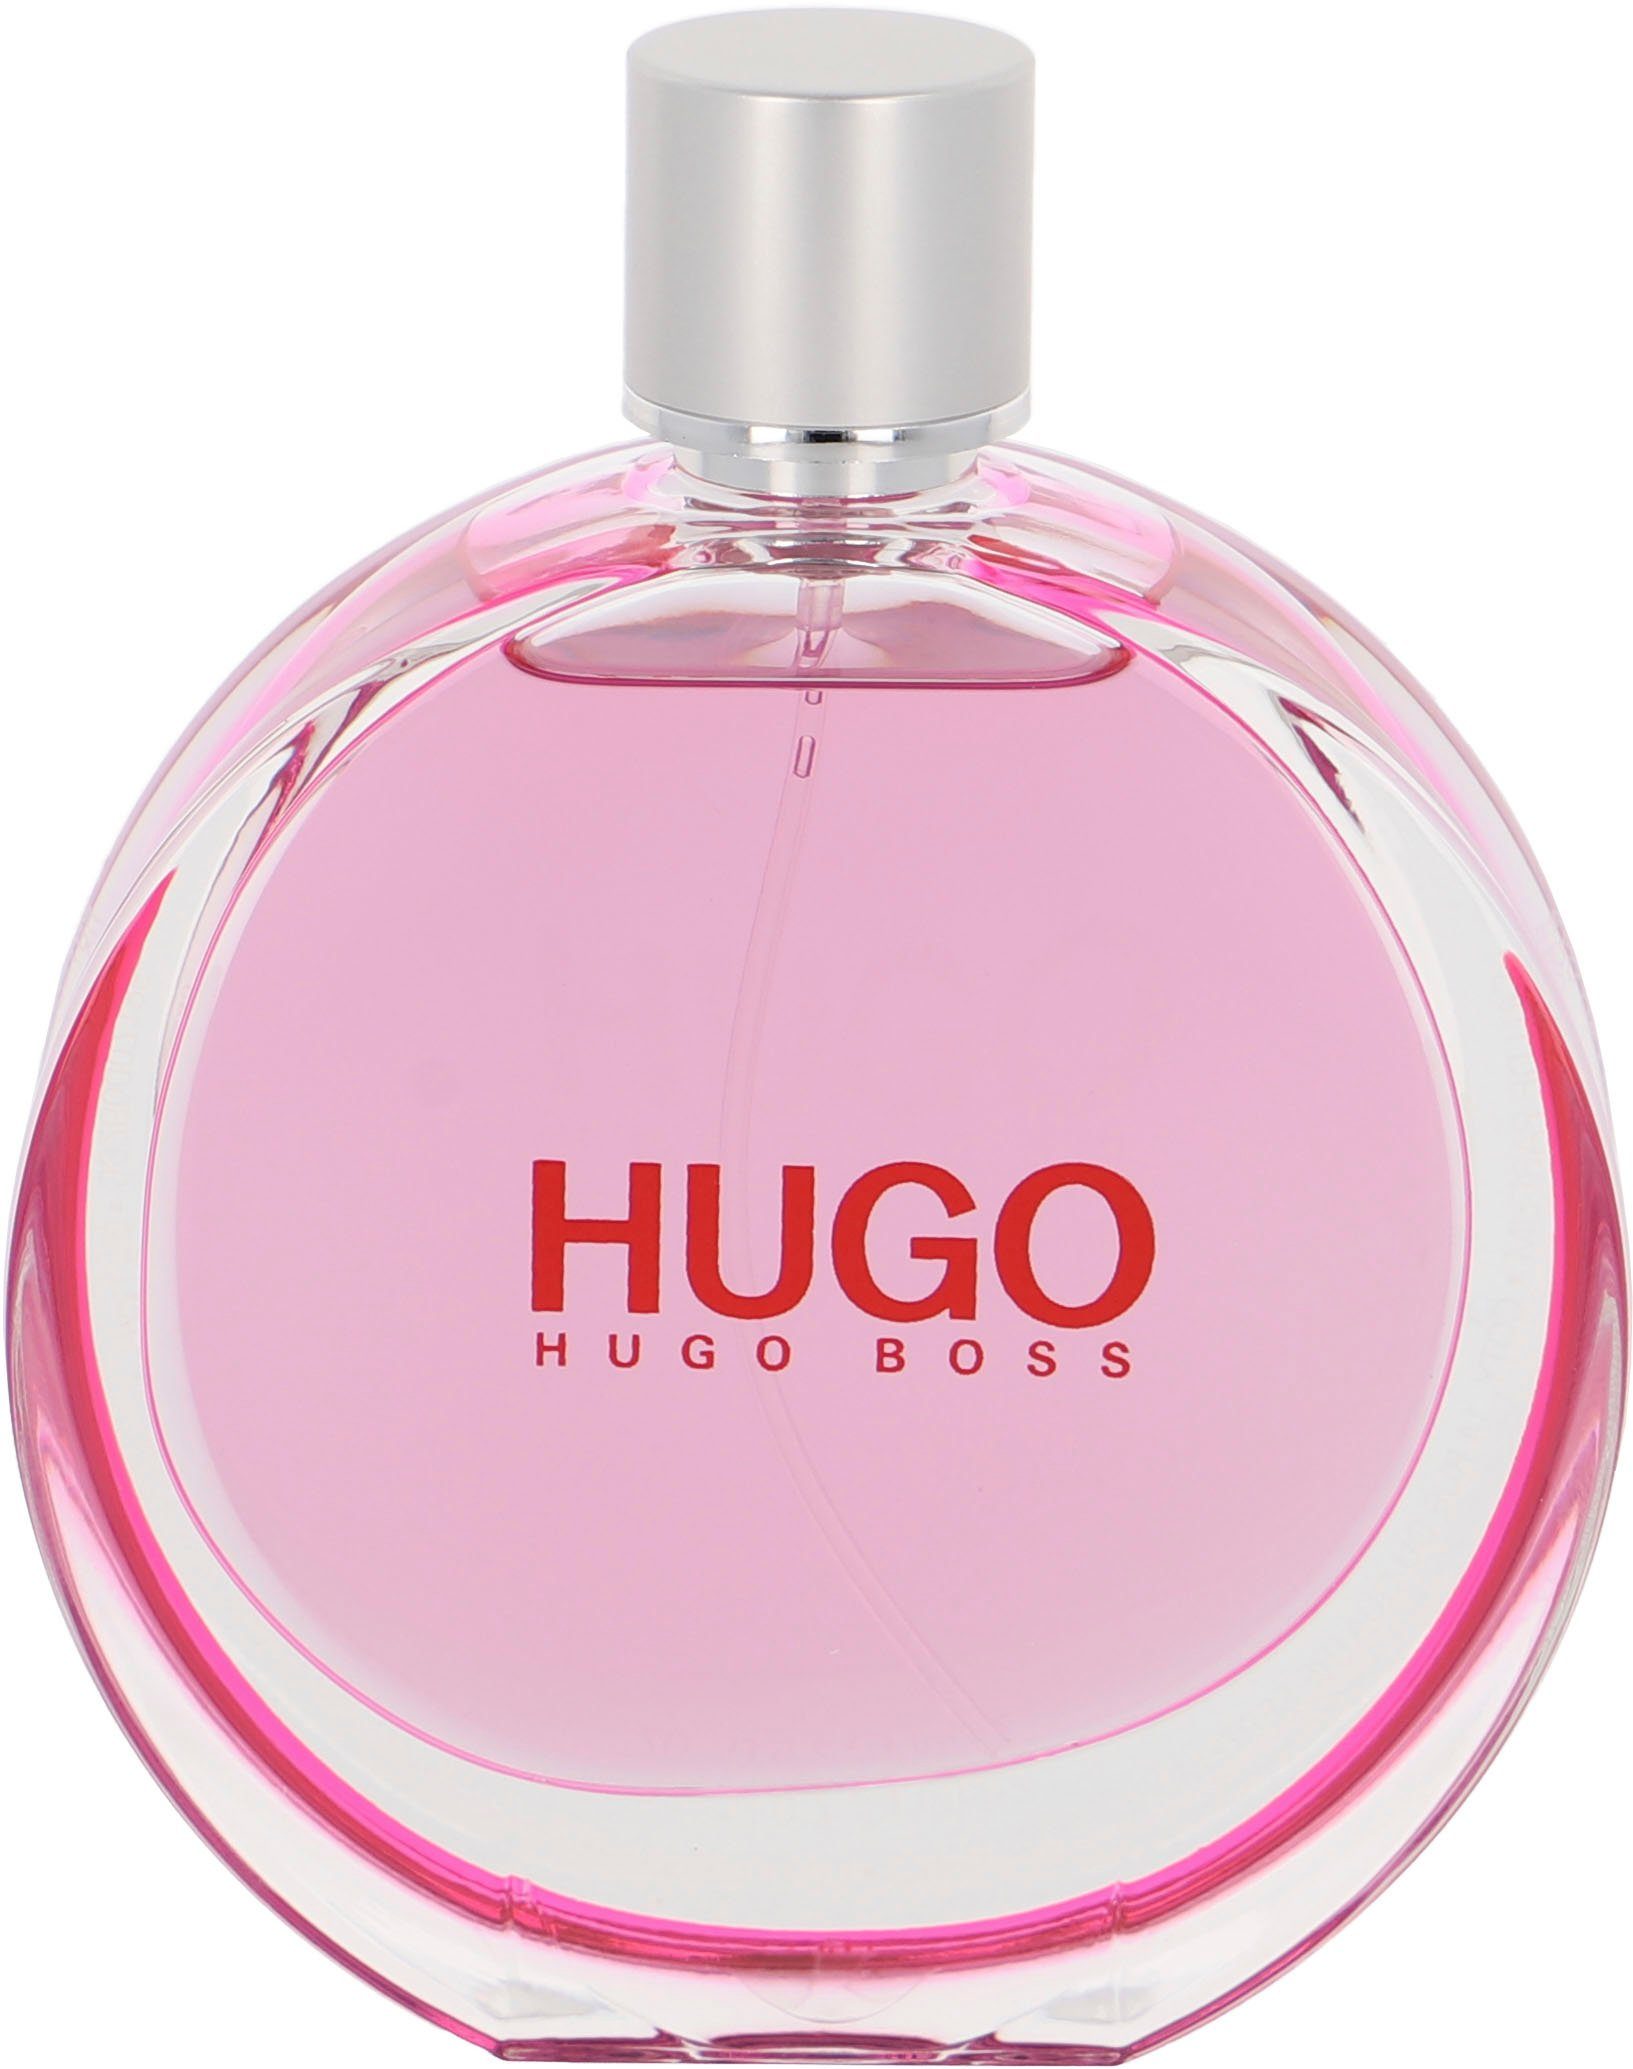 BOSS Parfum Extreme de Eau Woman Hugo